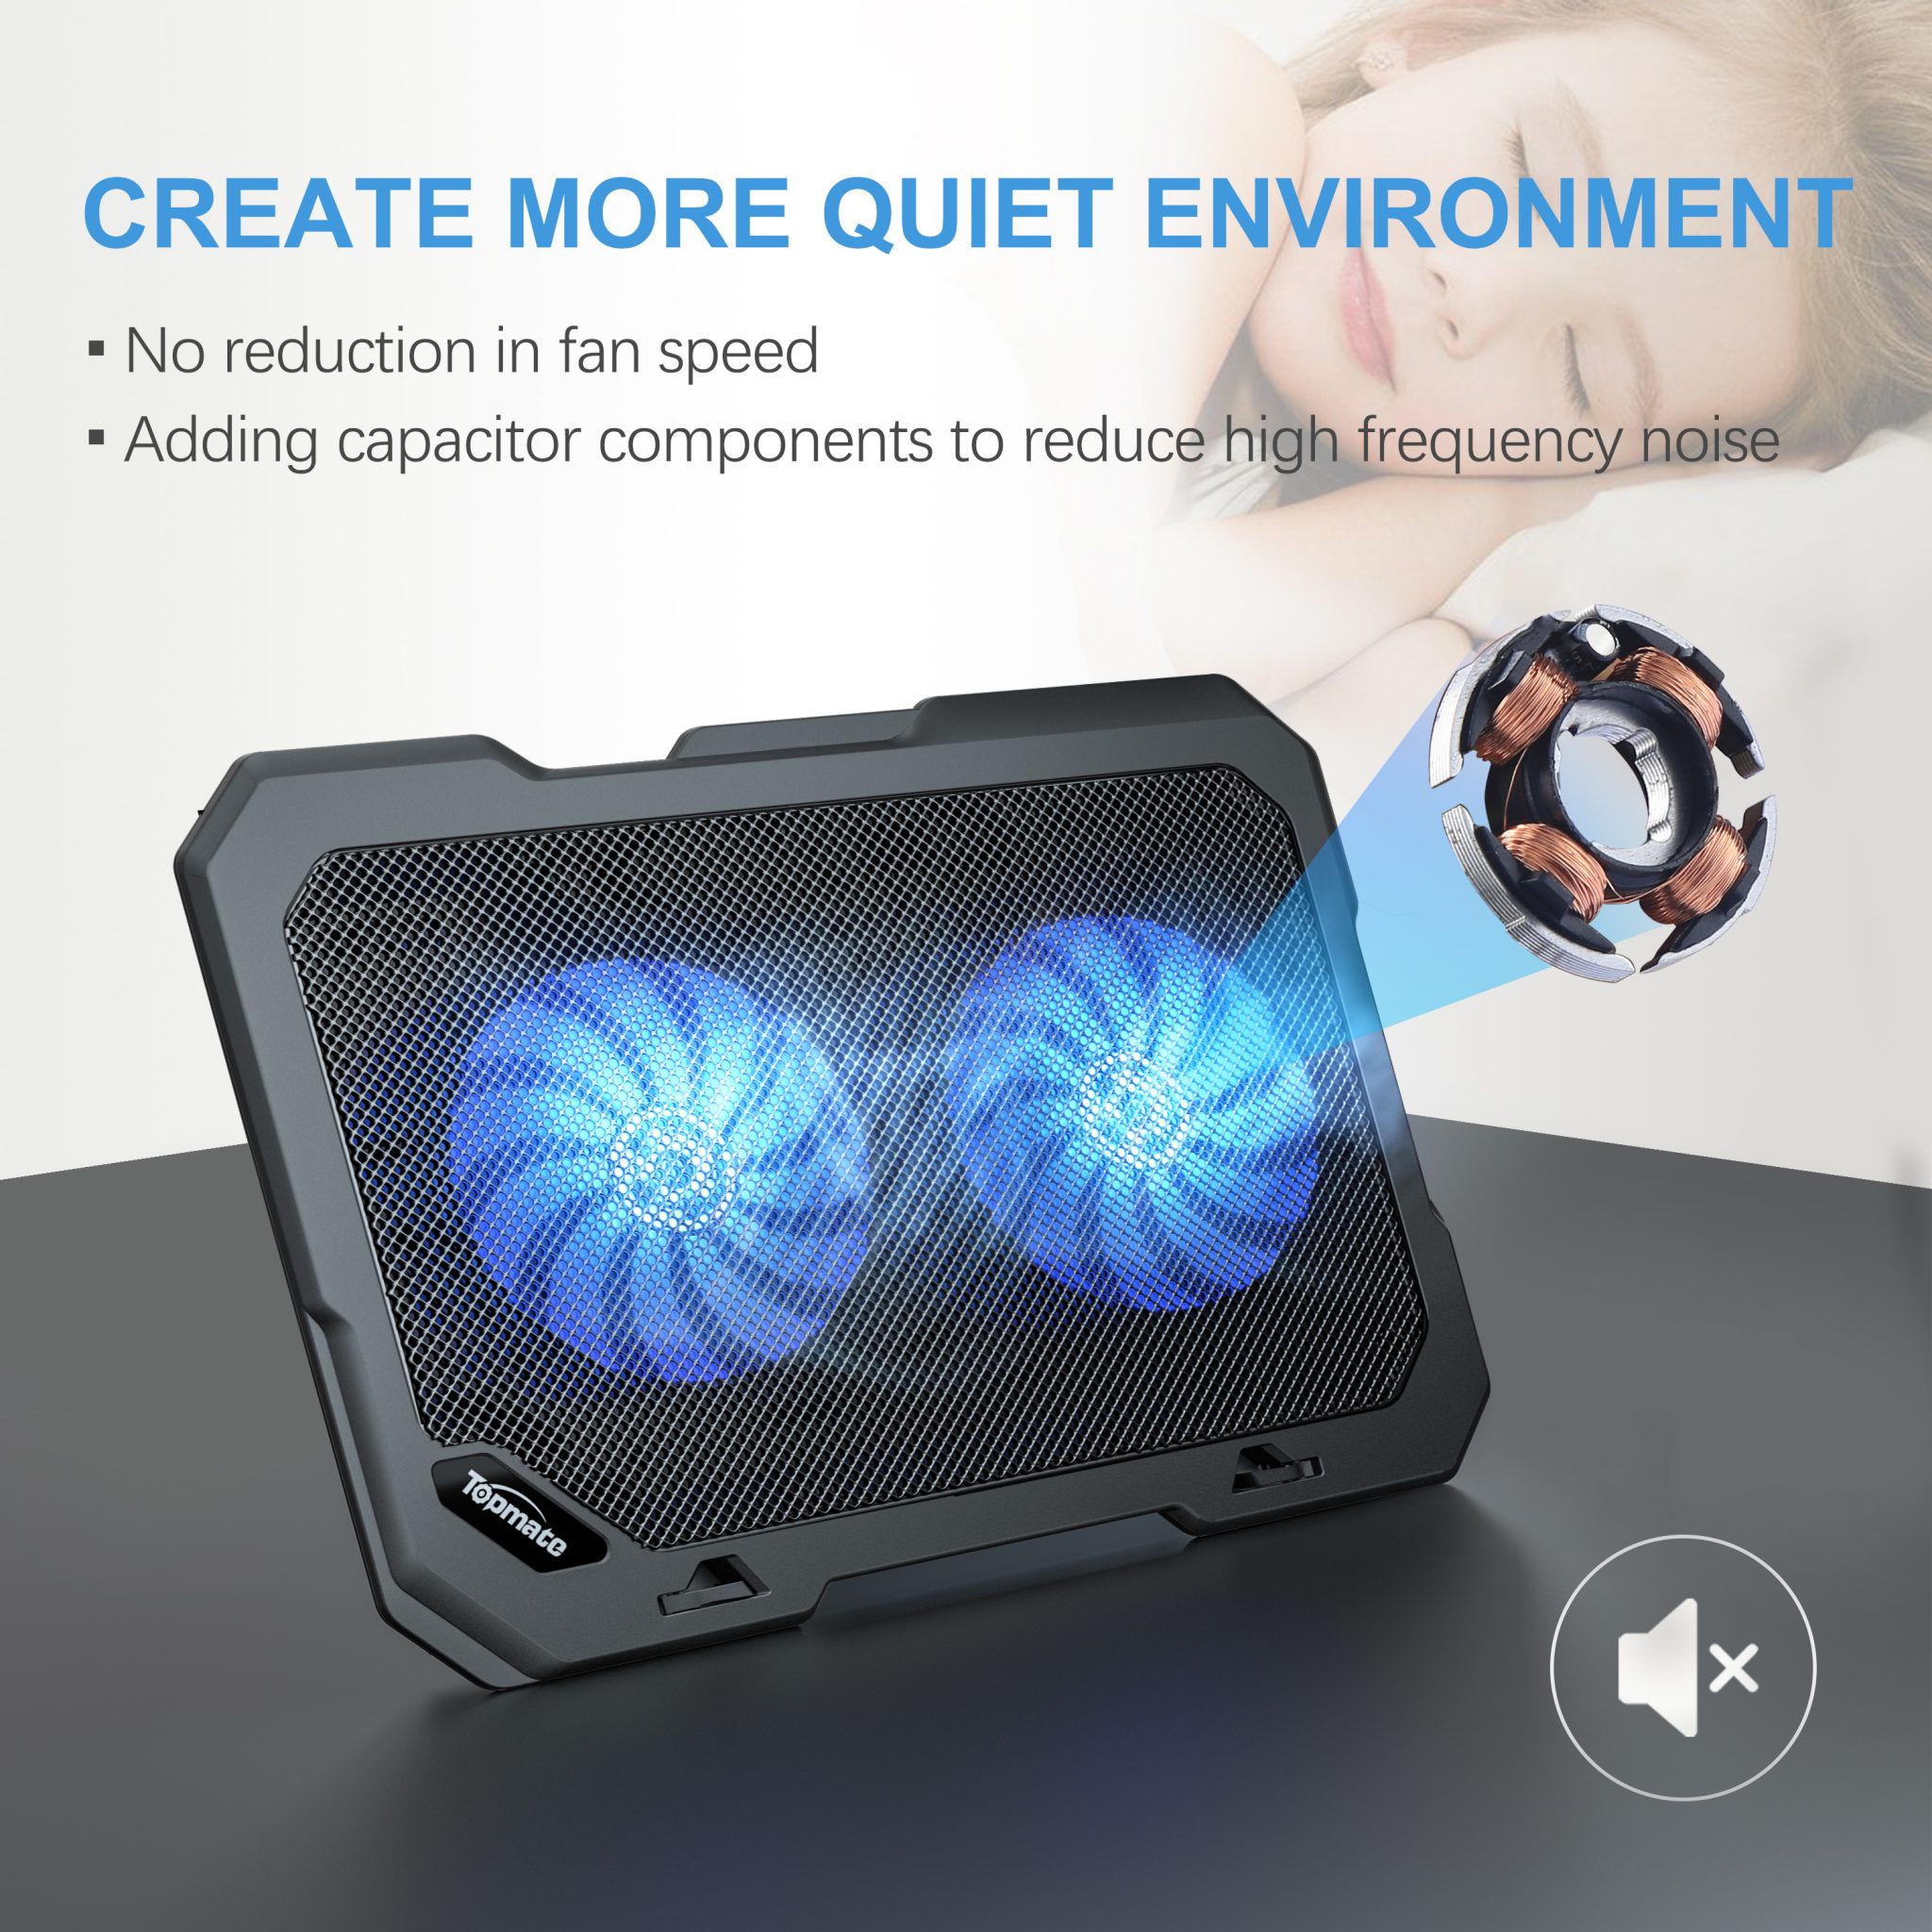 møde Institut muggen Buy Cooling Pad at Lowest price | Ultra Slim Portable Two Quite Fans